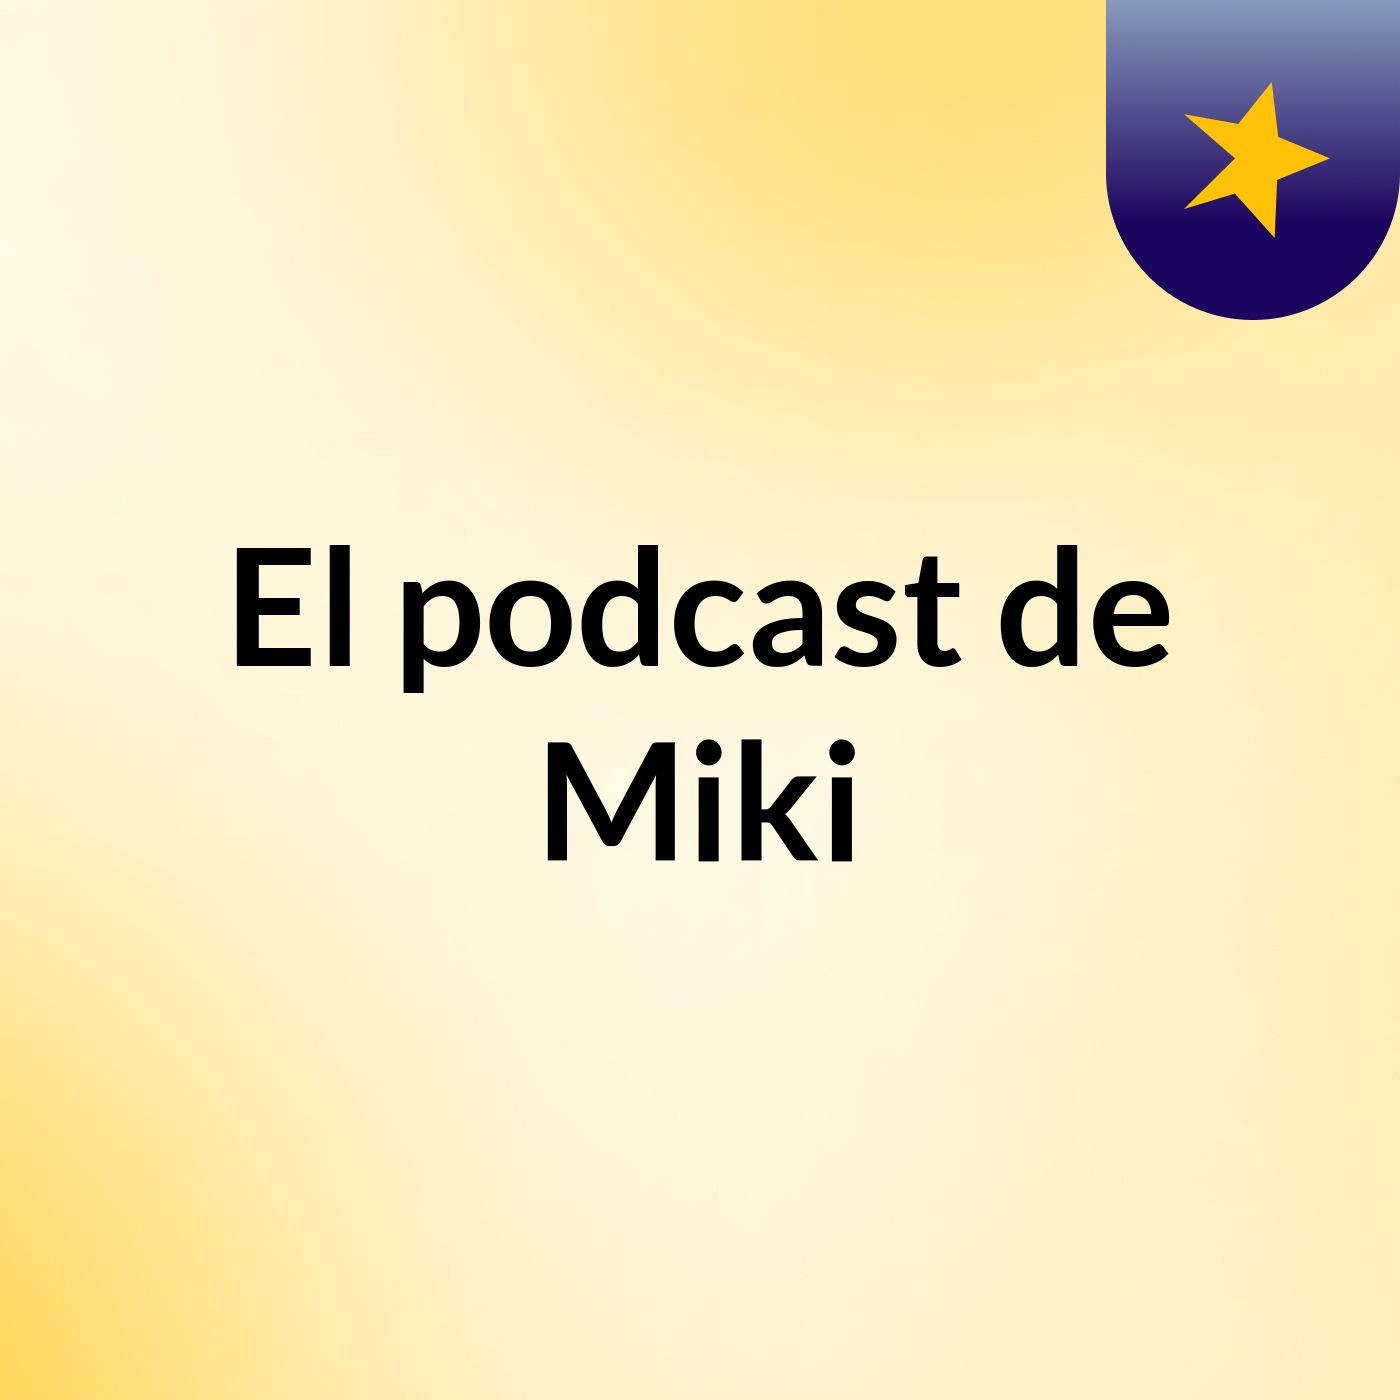 El podcast de Miki